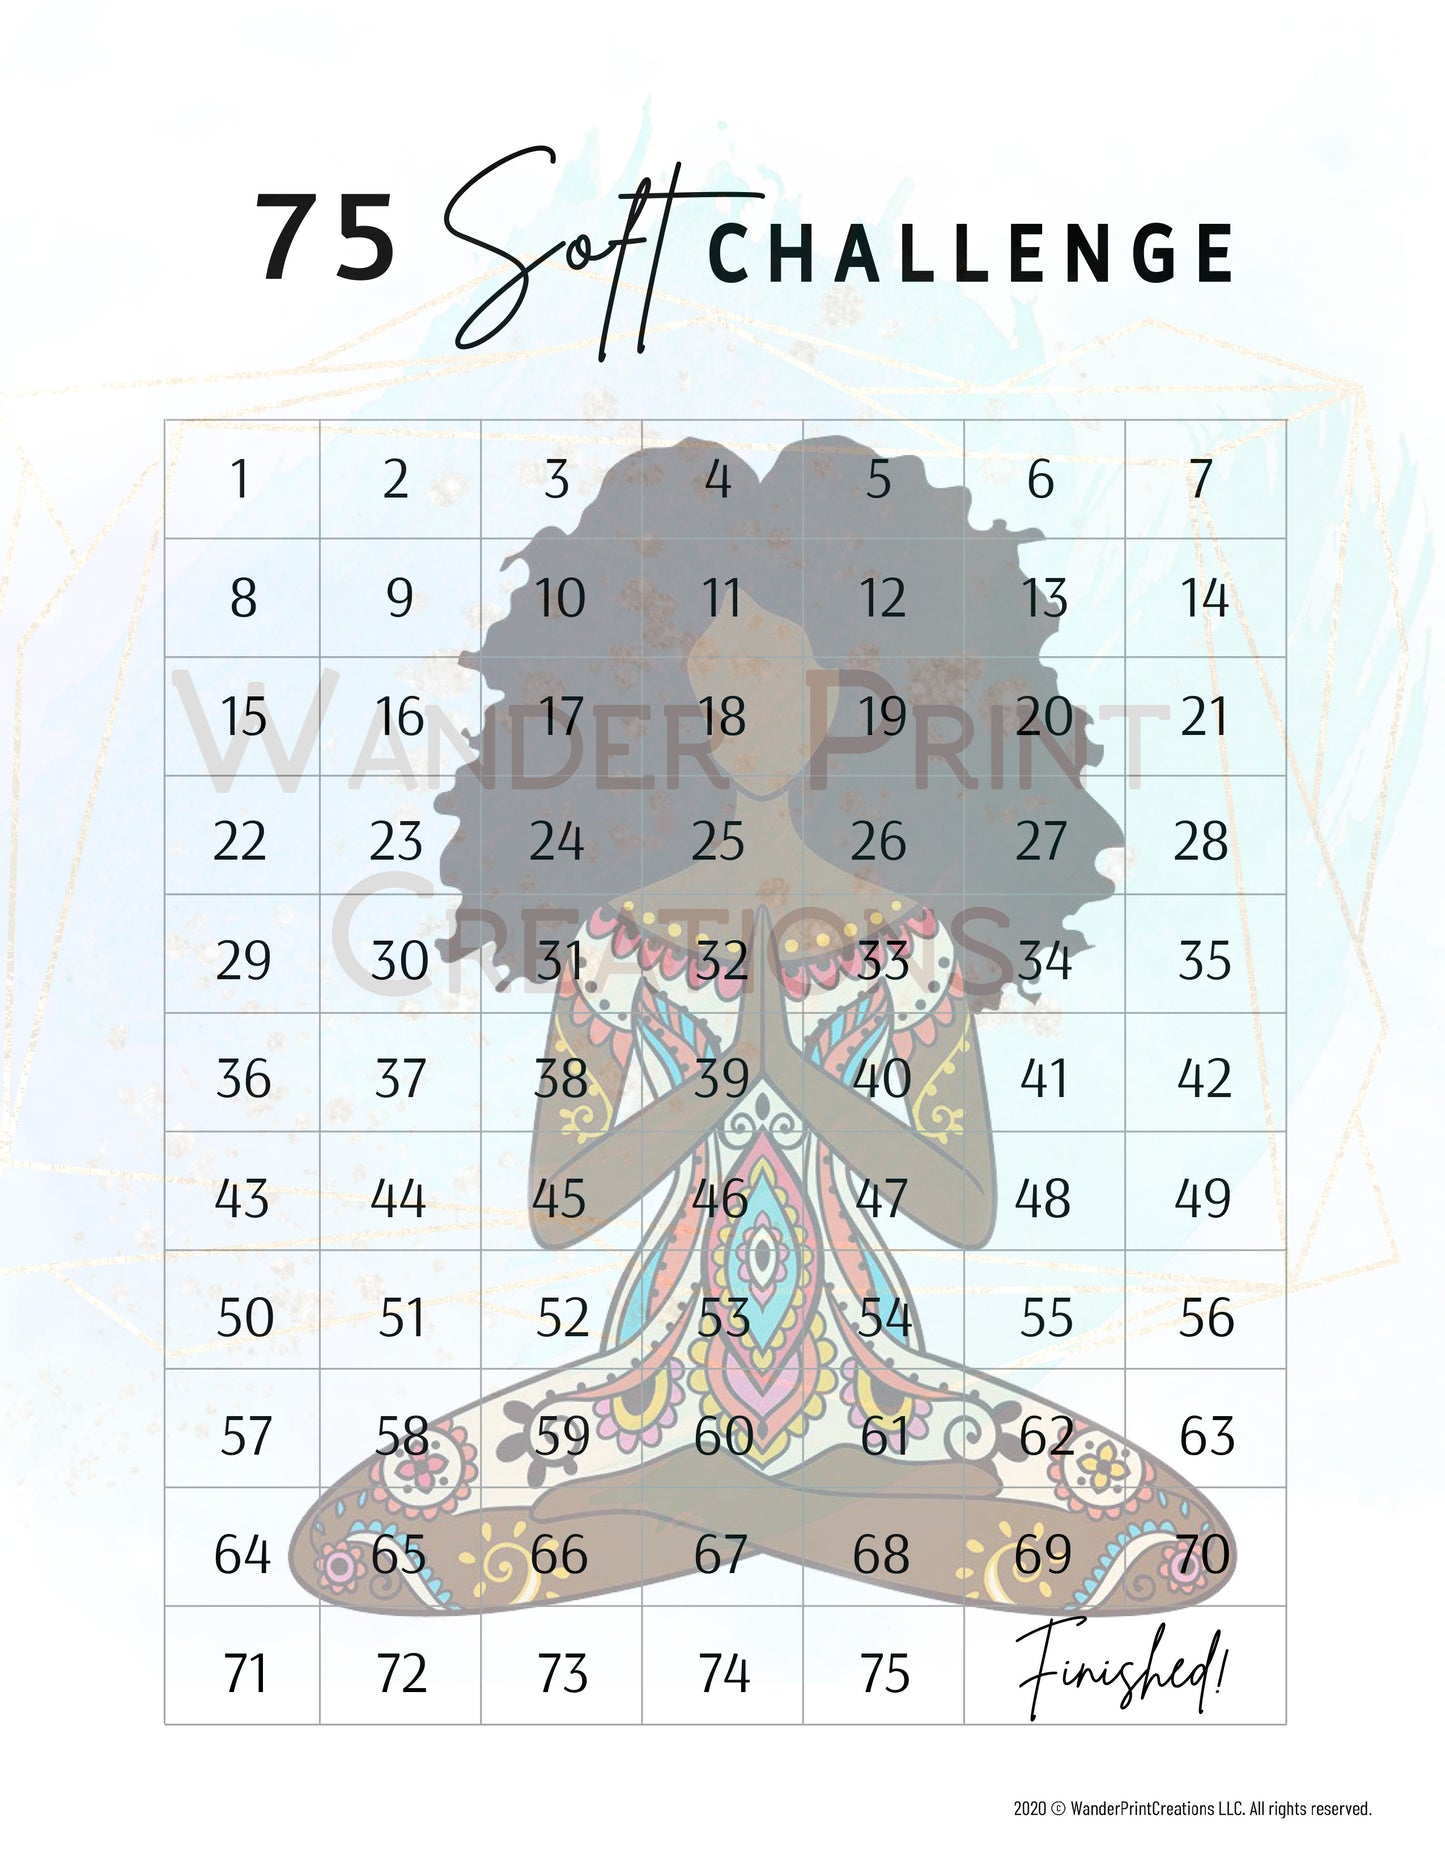 75 SOFT CHALLENGE BUNDLE